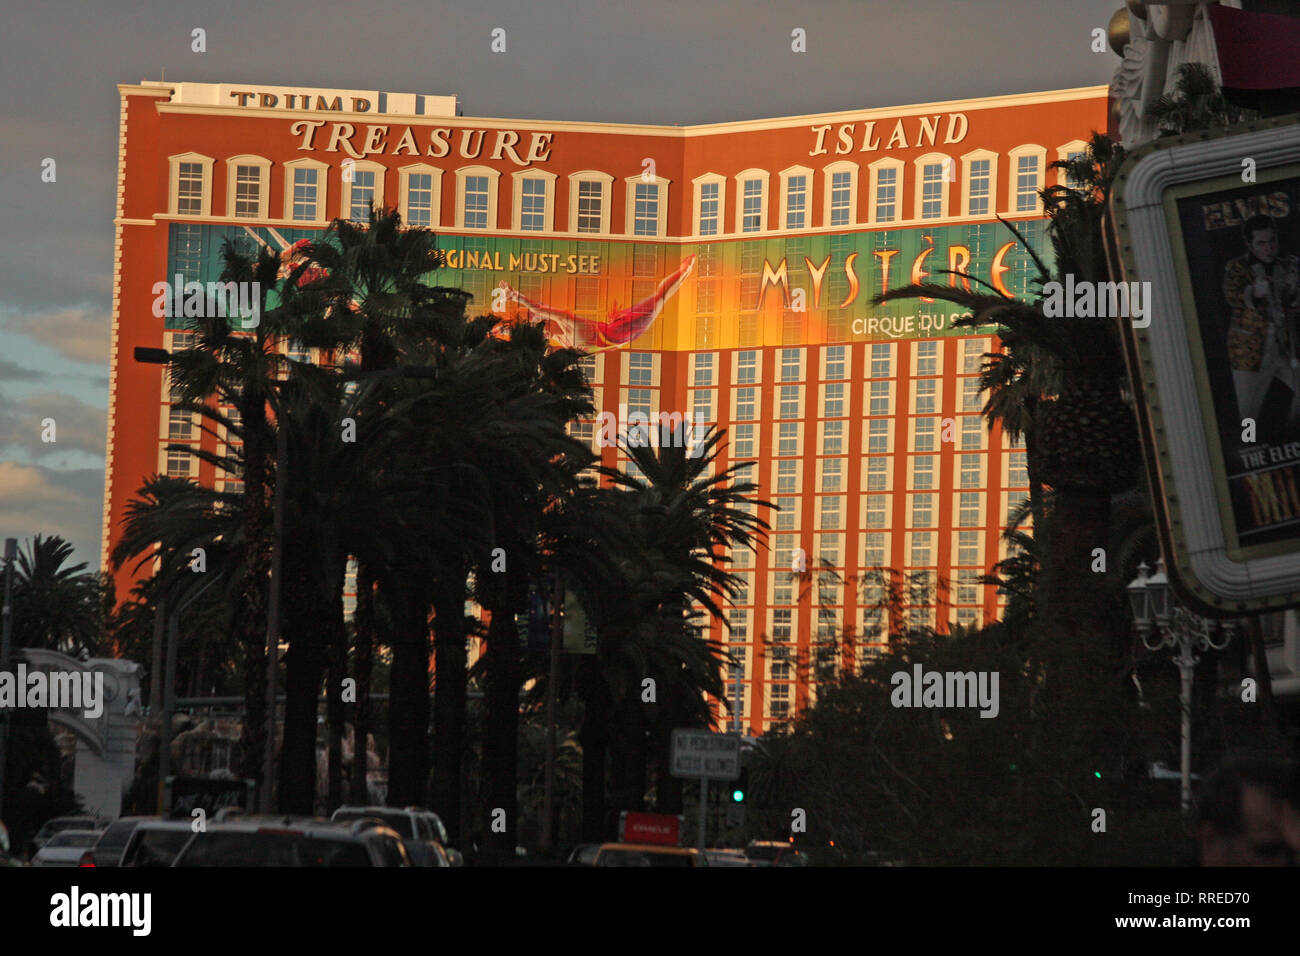 Treasure Island Hotel & Casino in Las Vegas, NV, USA Stock Photo